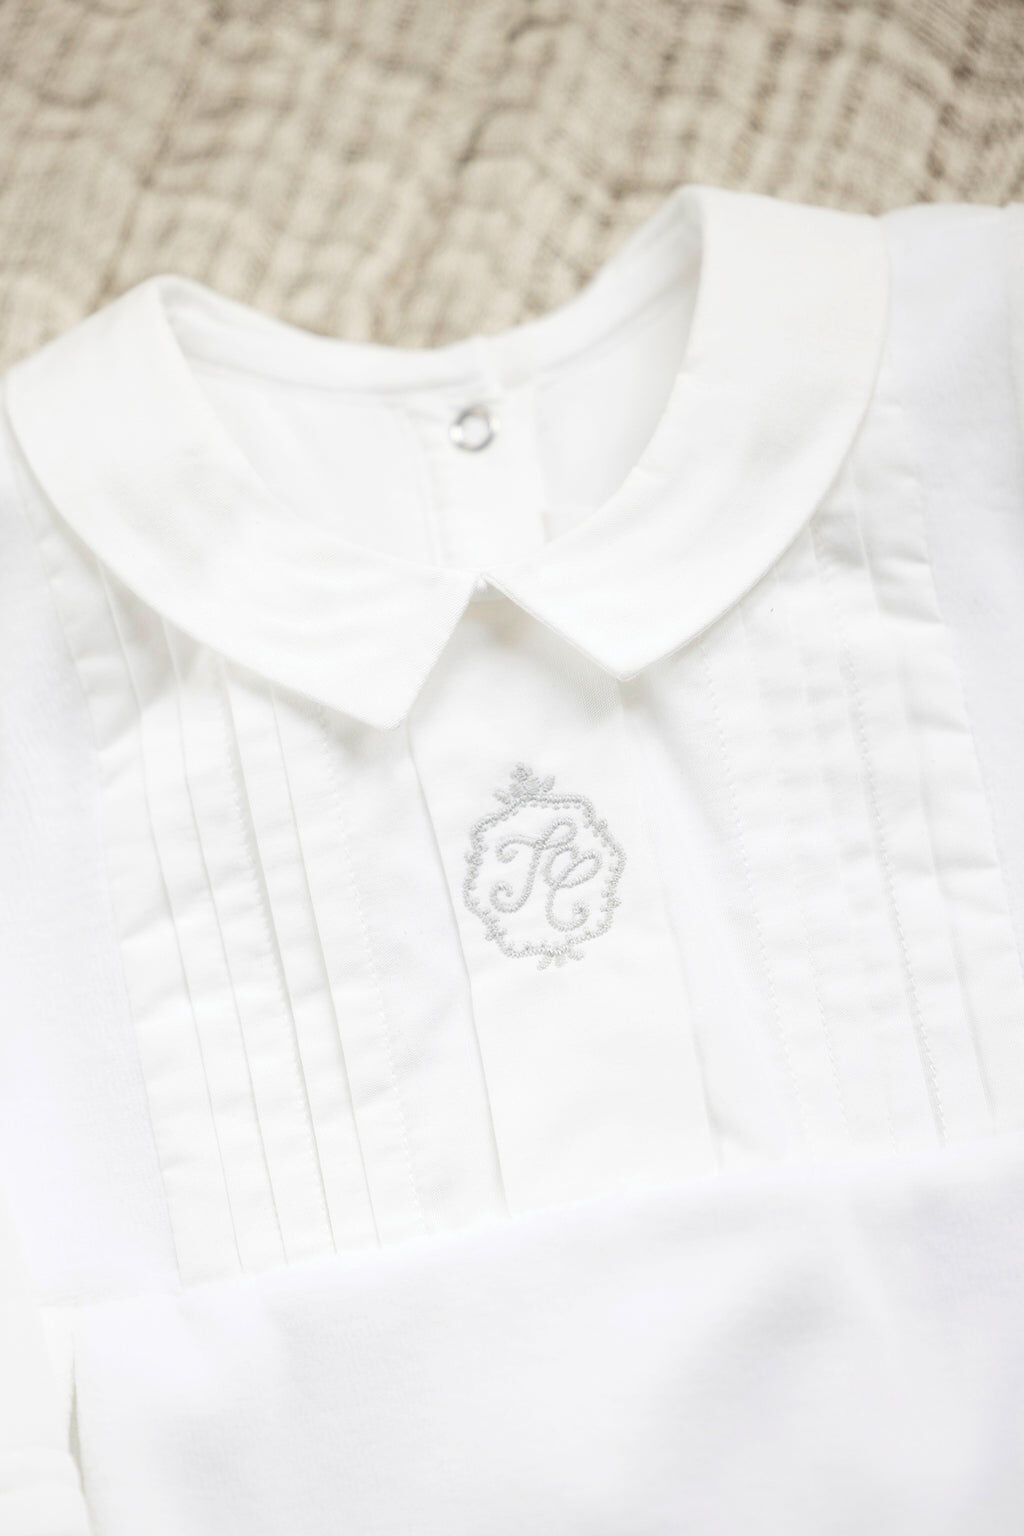 Pyjamas - White Velvet Bib collar